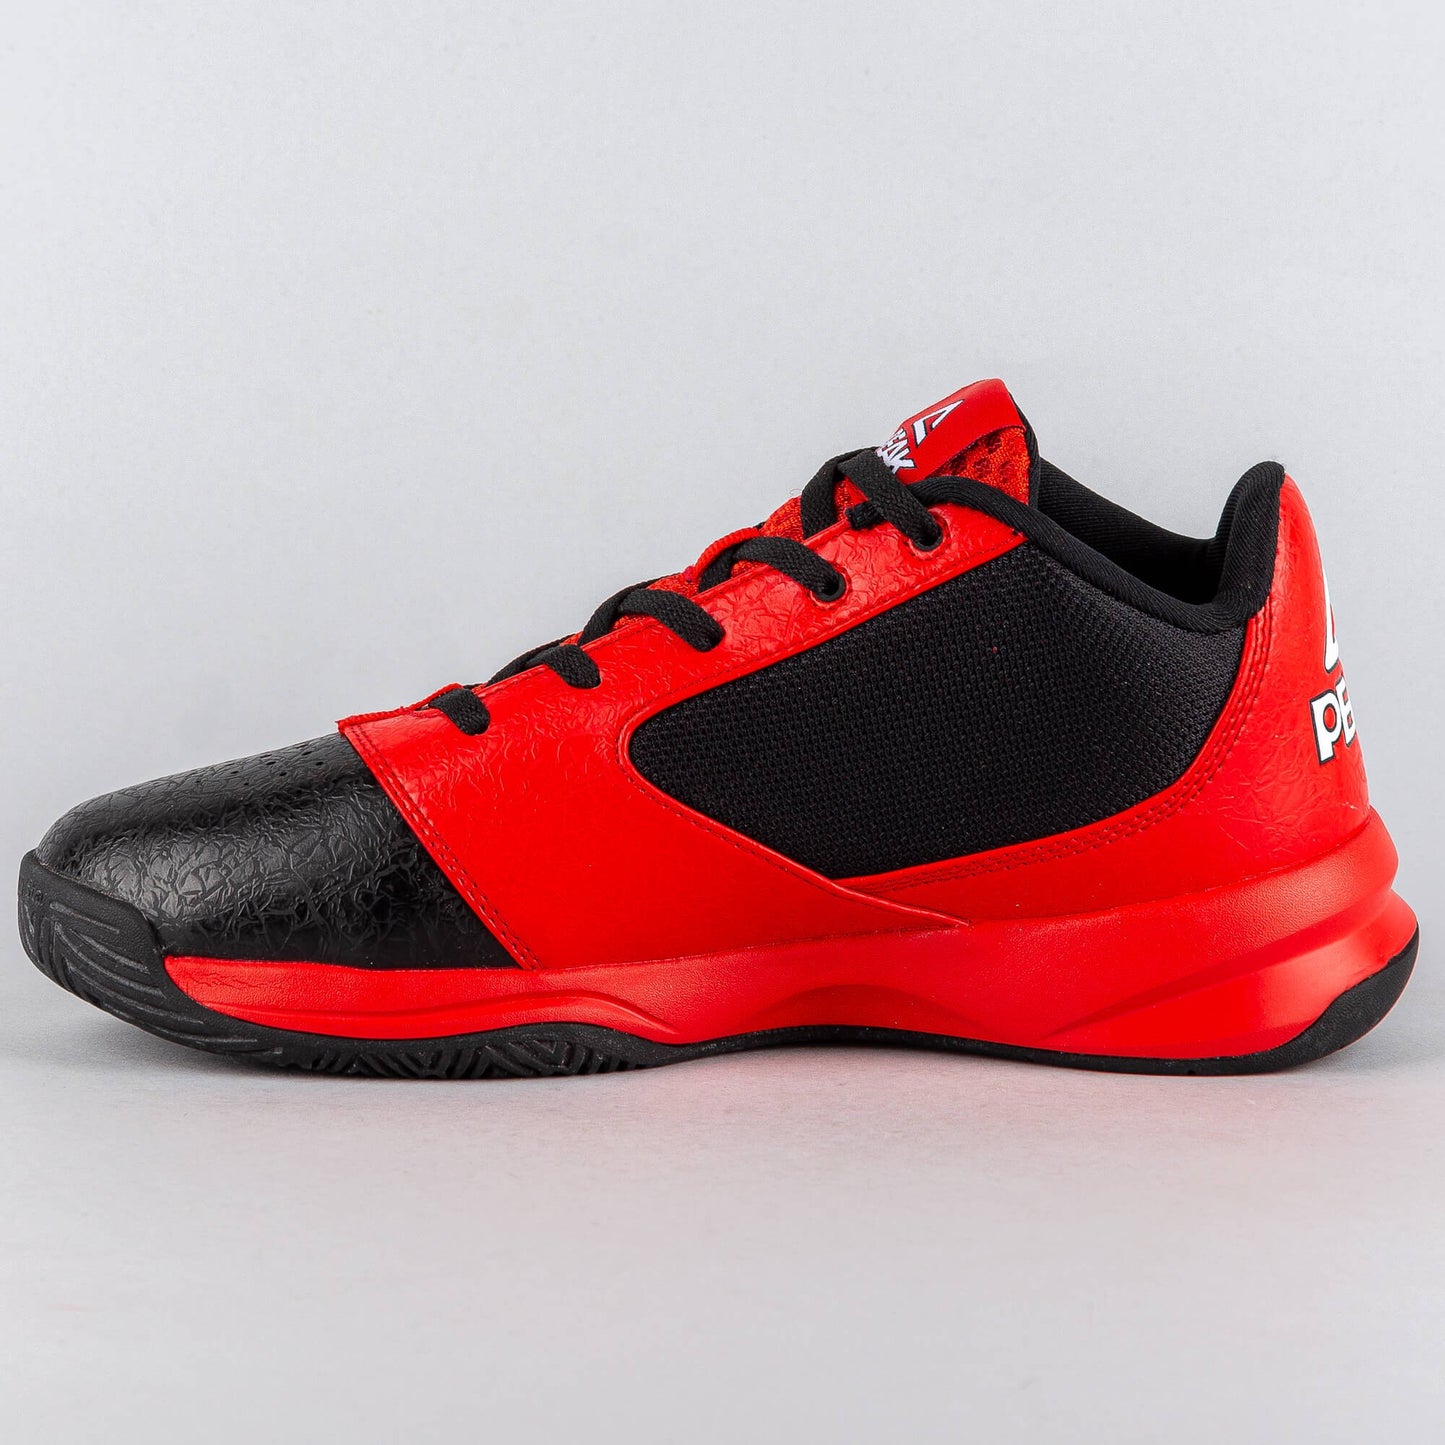 PEAK Basketball Shoes Nova Dk.Red/Black